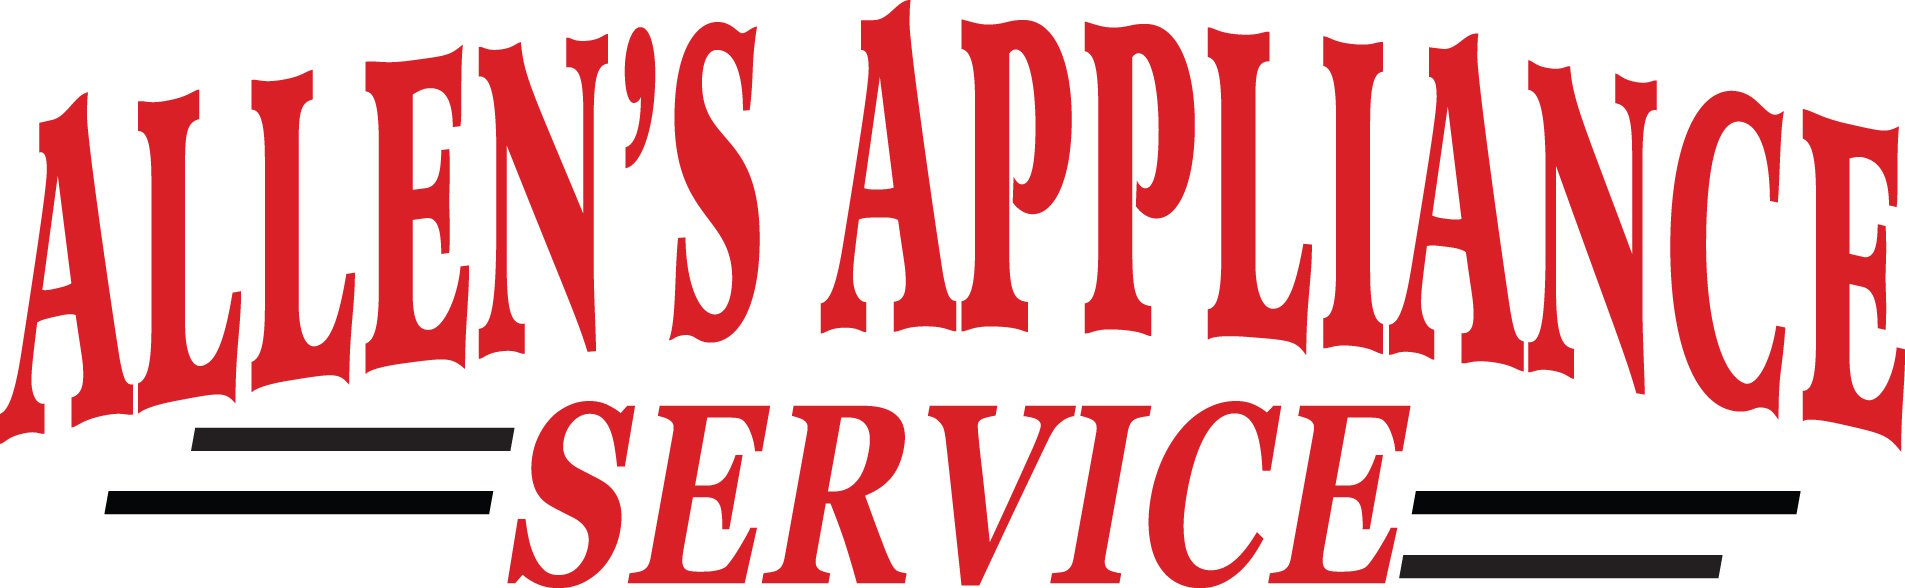 Allen's Appliance Service, Inc. Logo